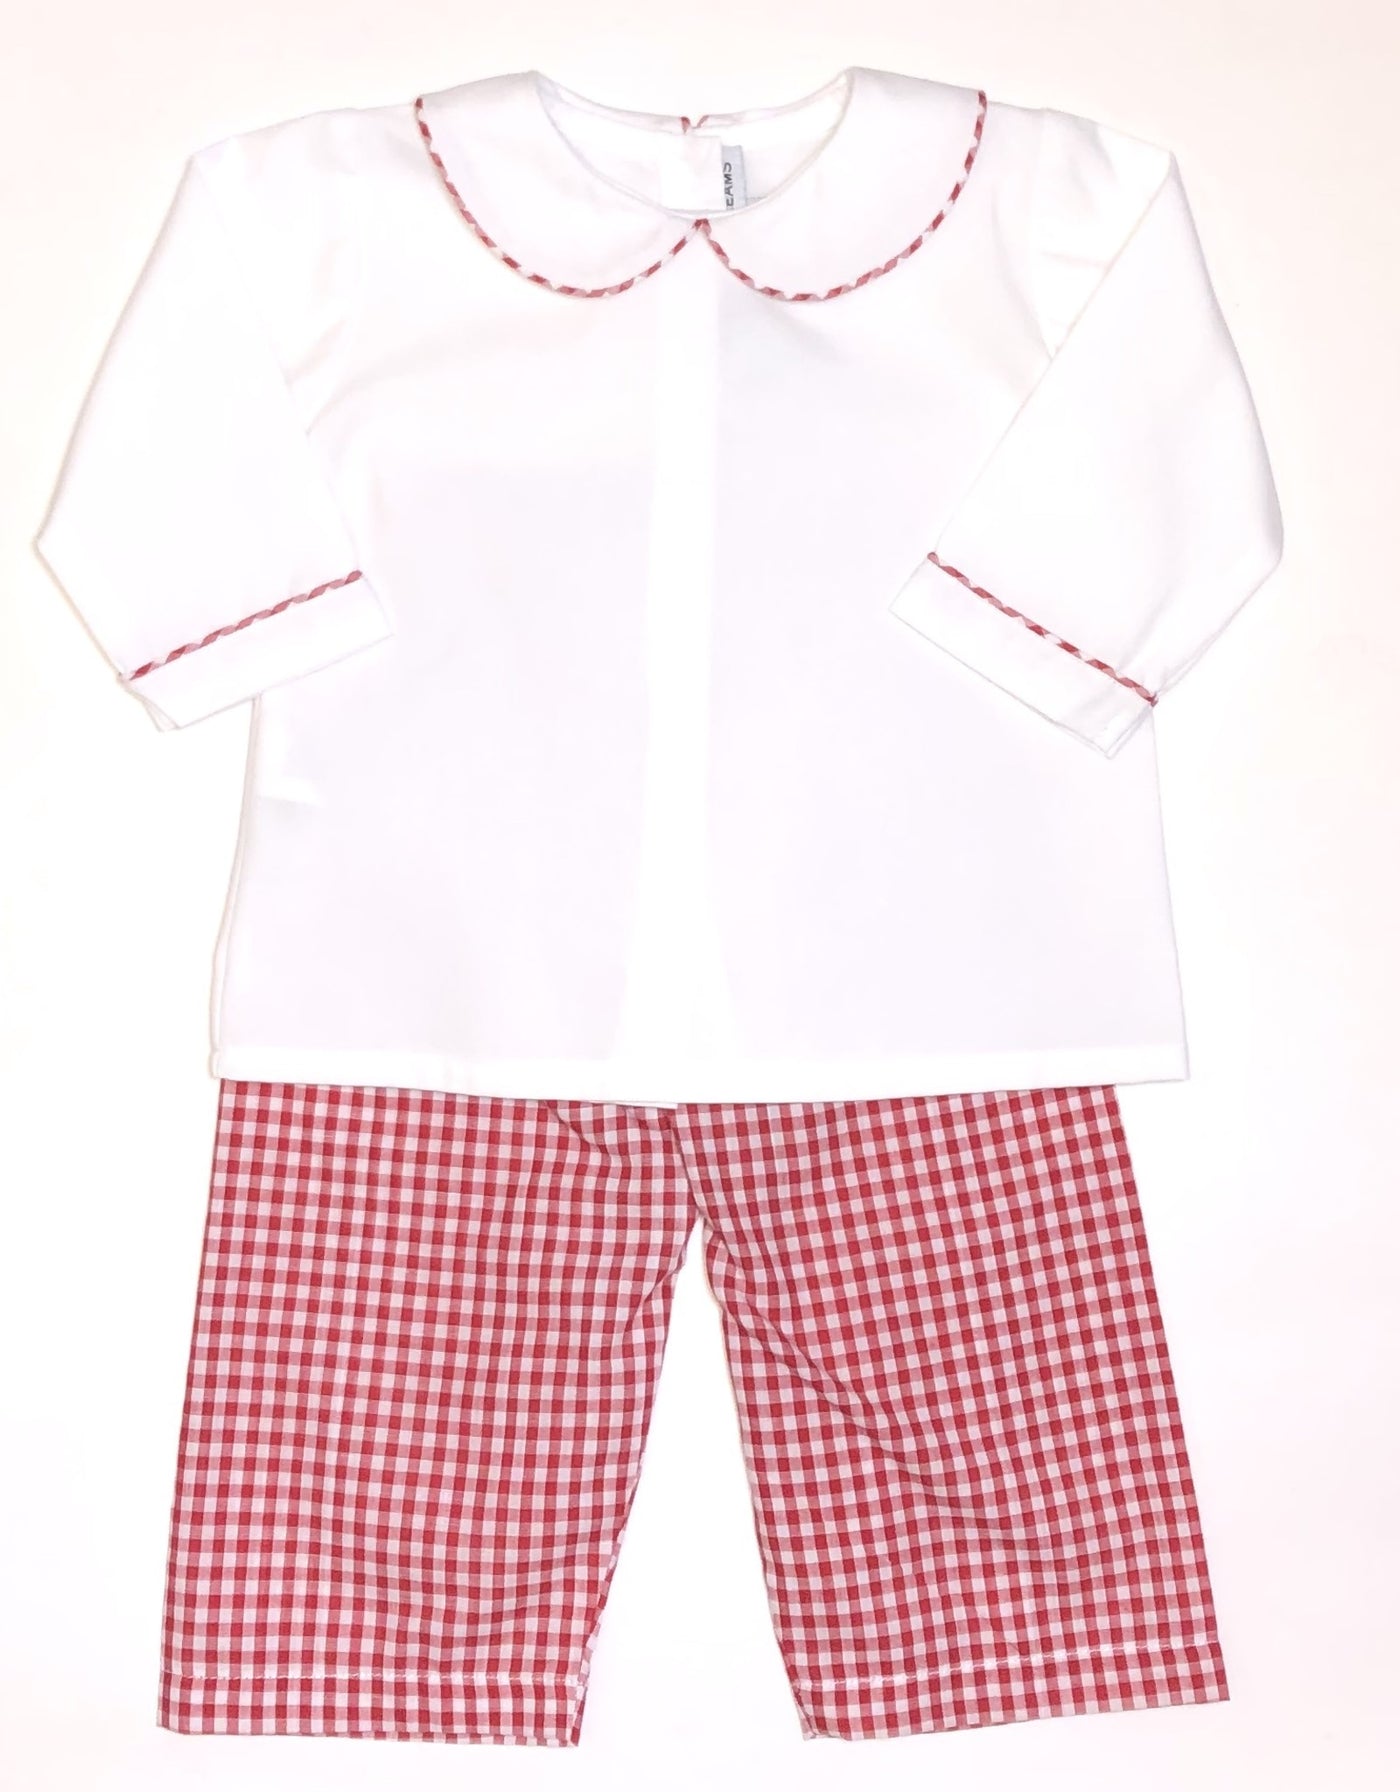 White/Red Gingham Pants Set